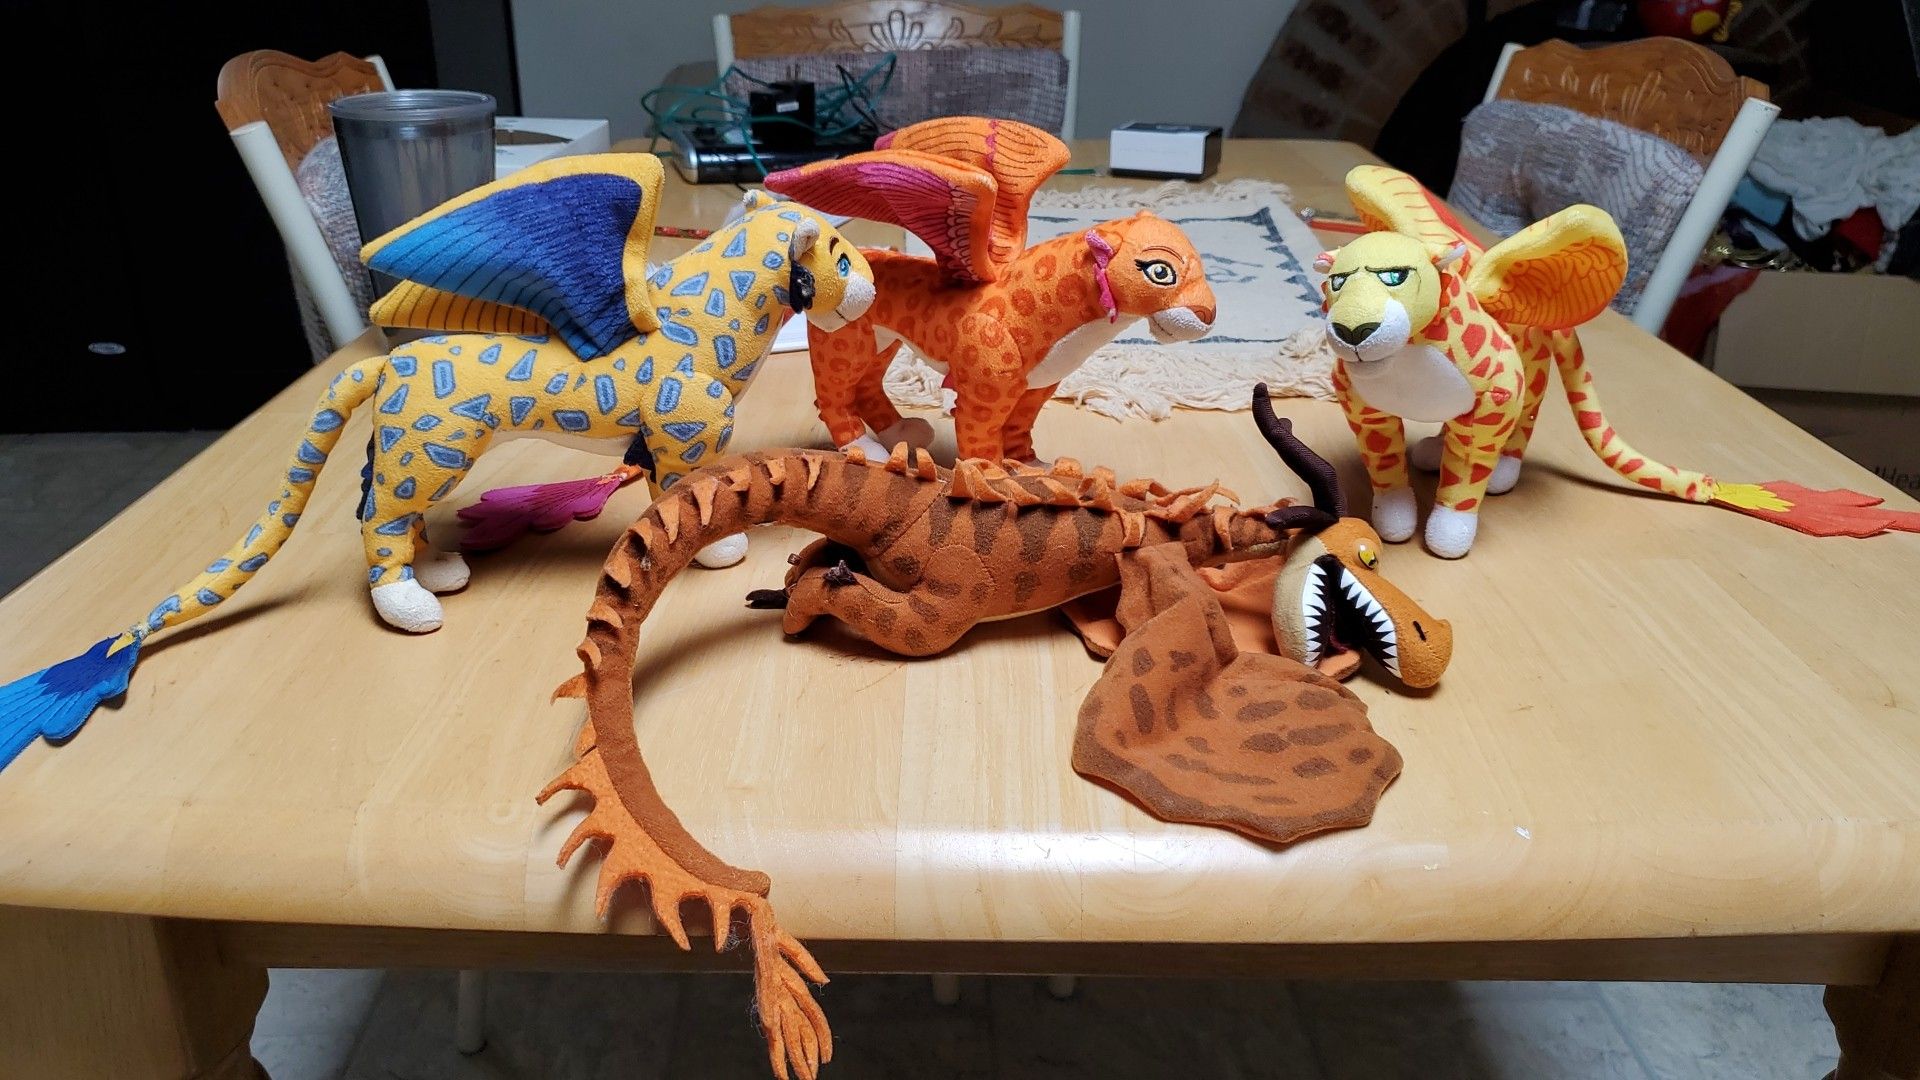 Fantasy stuffed animals